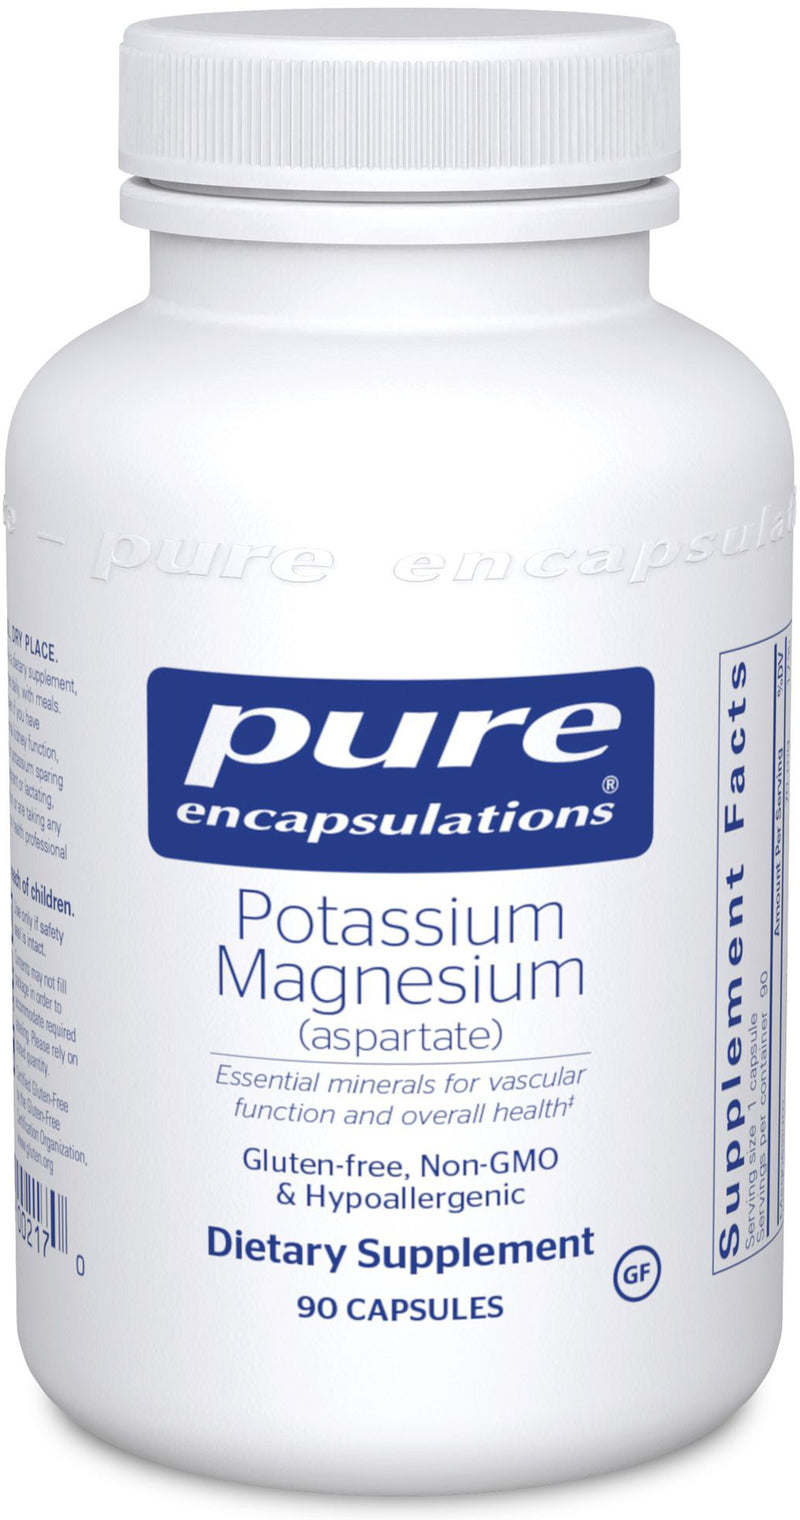 Load image into Gallery viewer, Potassium Magnesium (aspartate)
